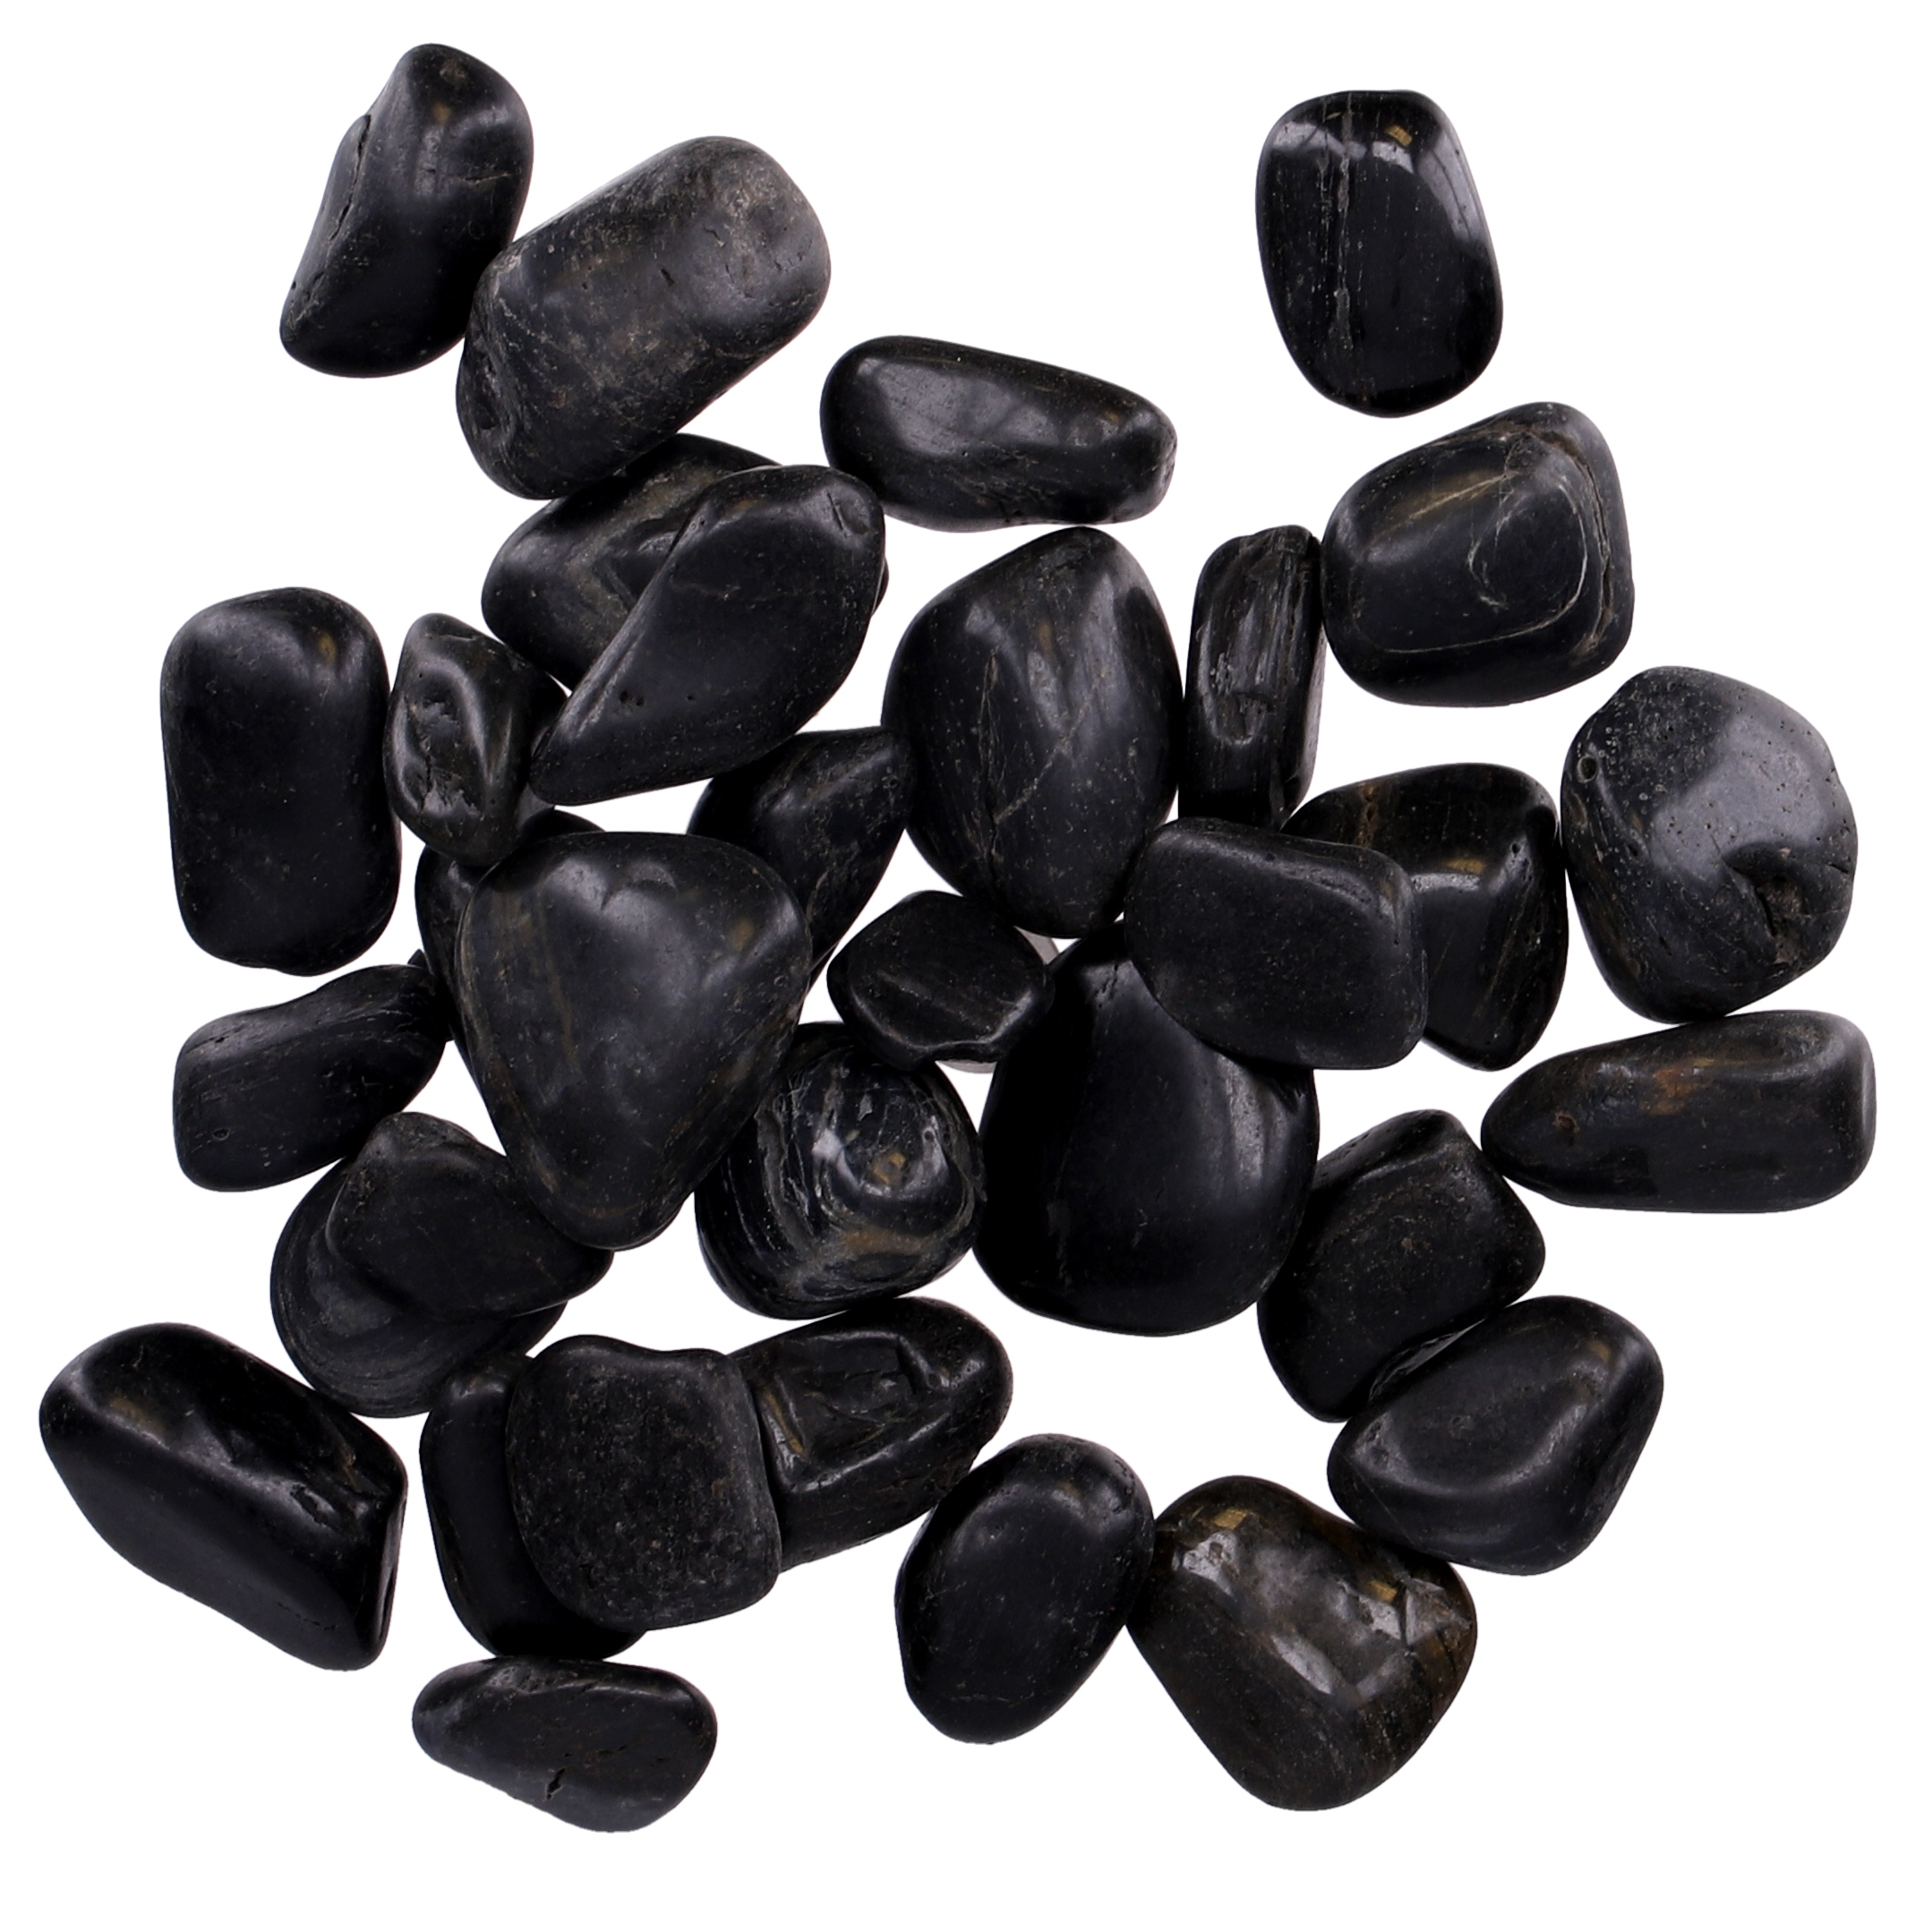 Small Black Stones 1kg